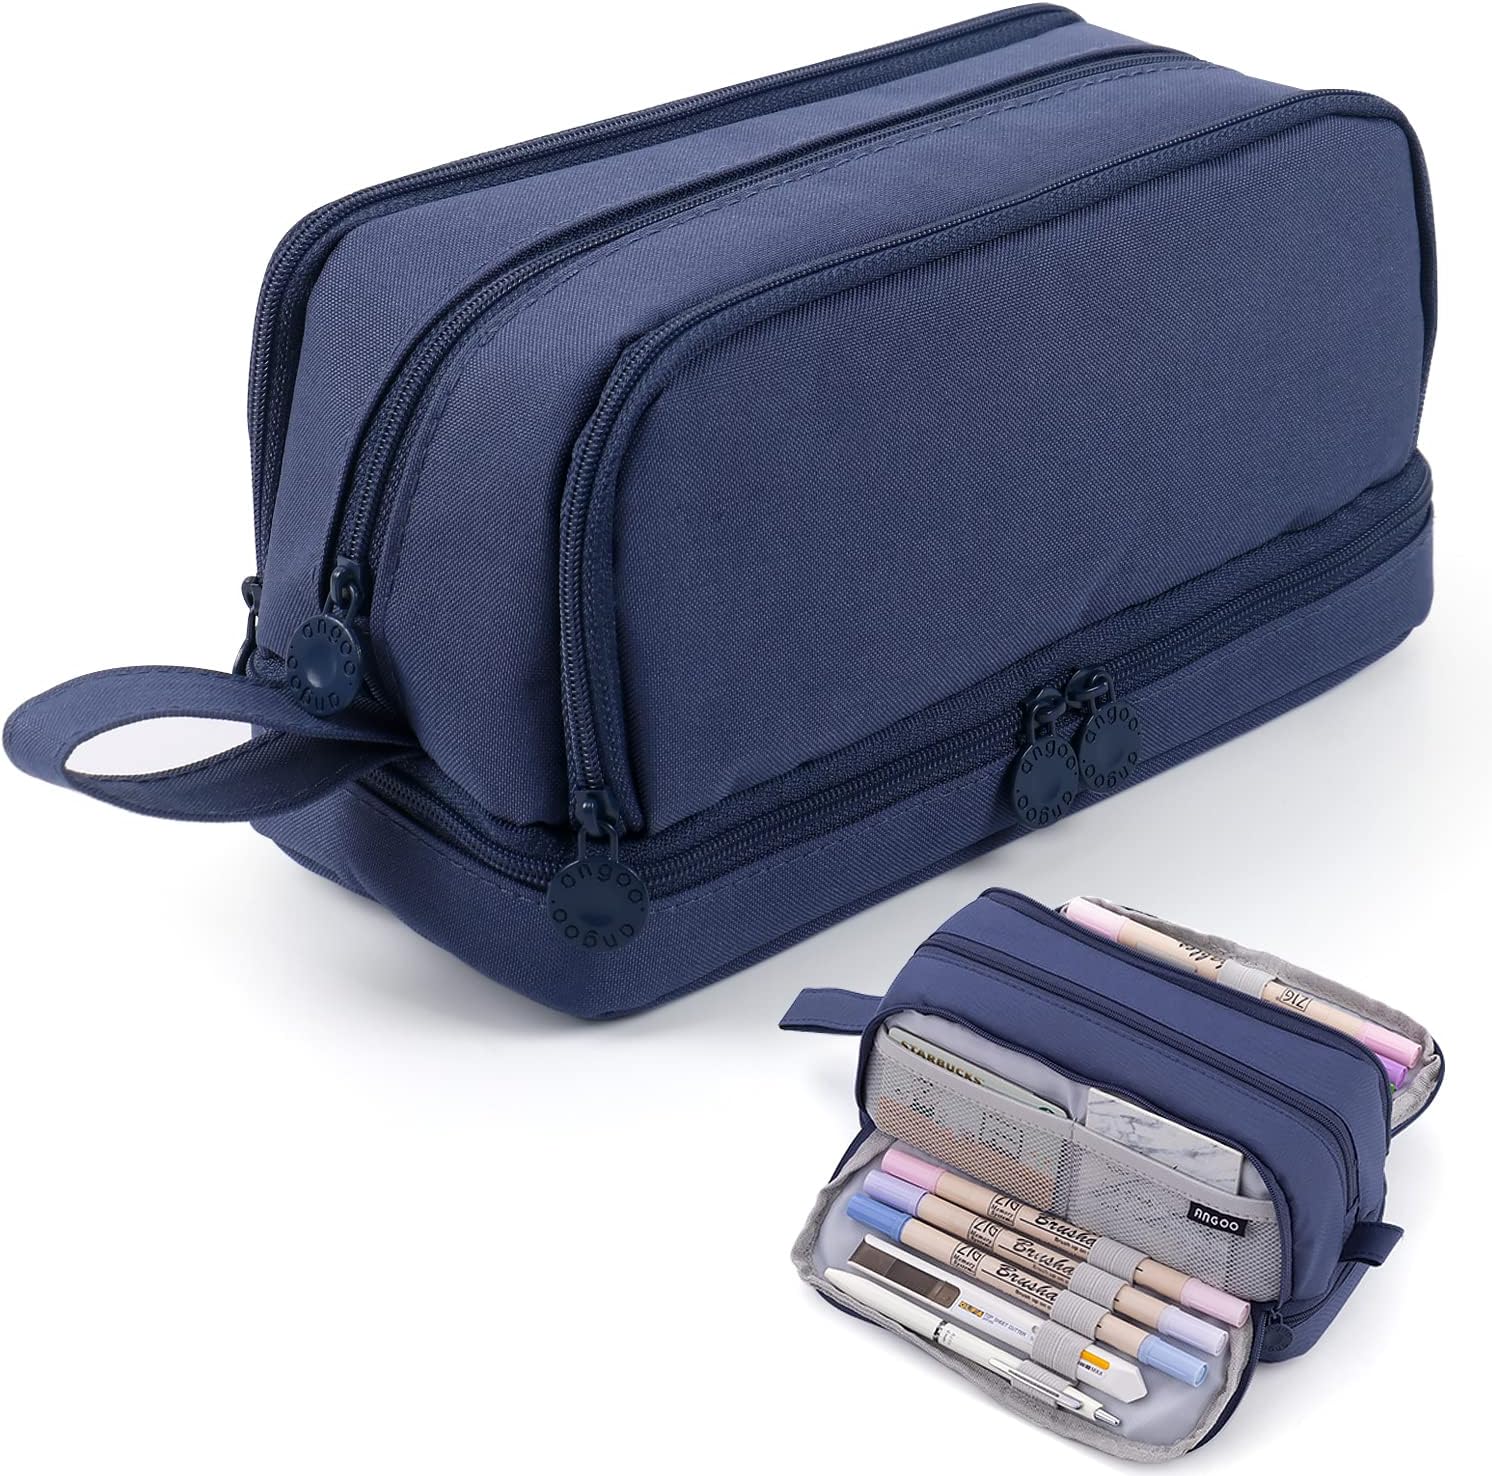 SKYCARPER Pen Organizer Case Pencil Case Cosmetic Bag#Blue, Size: One size, Black